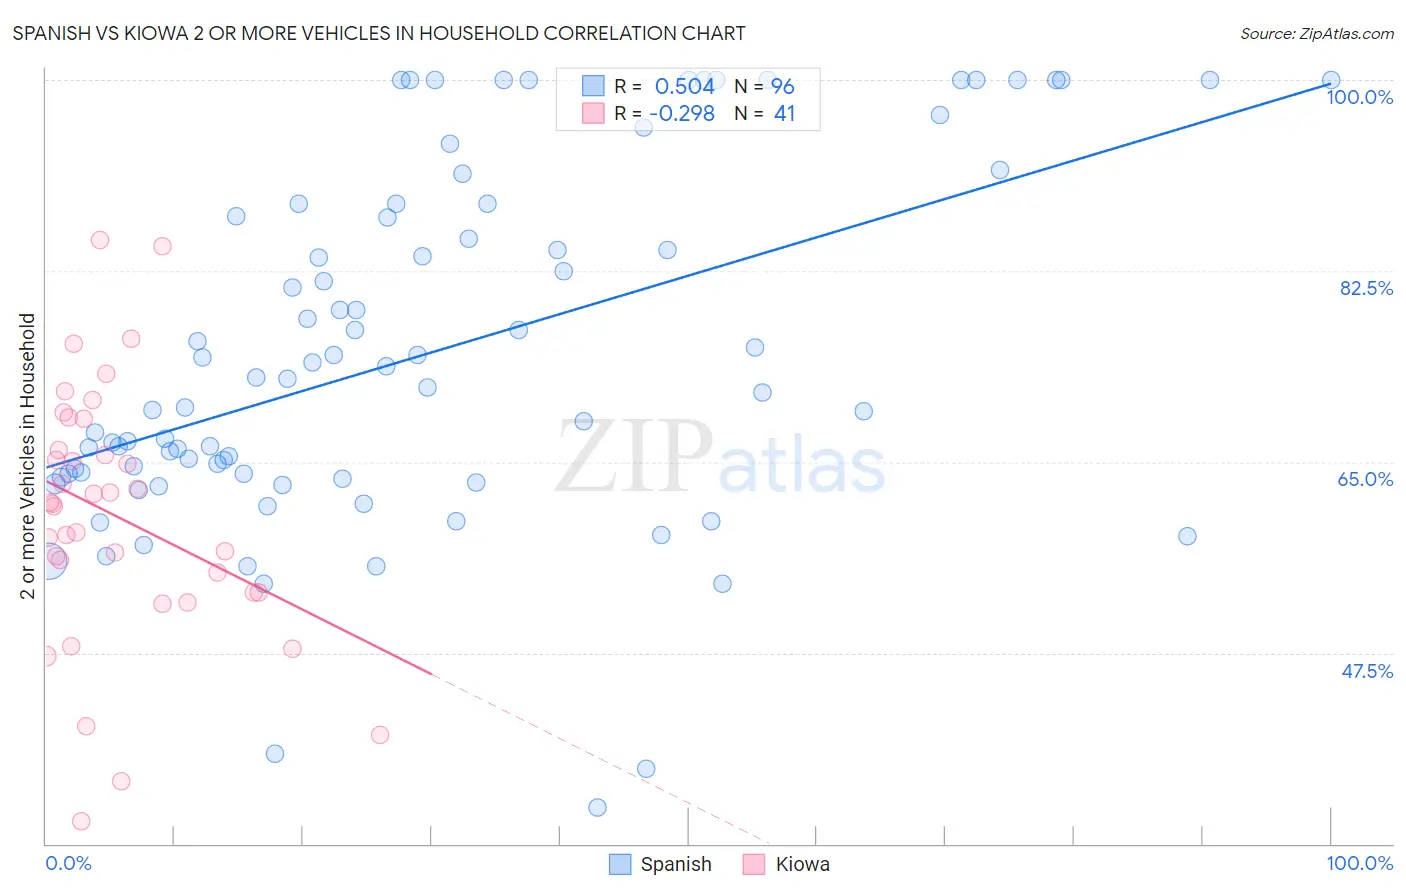 Spanish vs Kiowa 2 or more Vehicles in Household